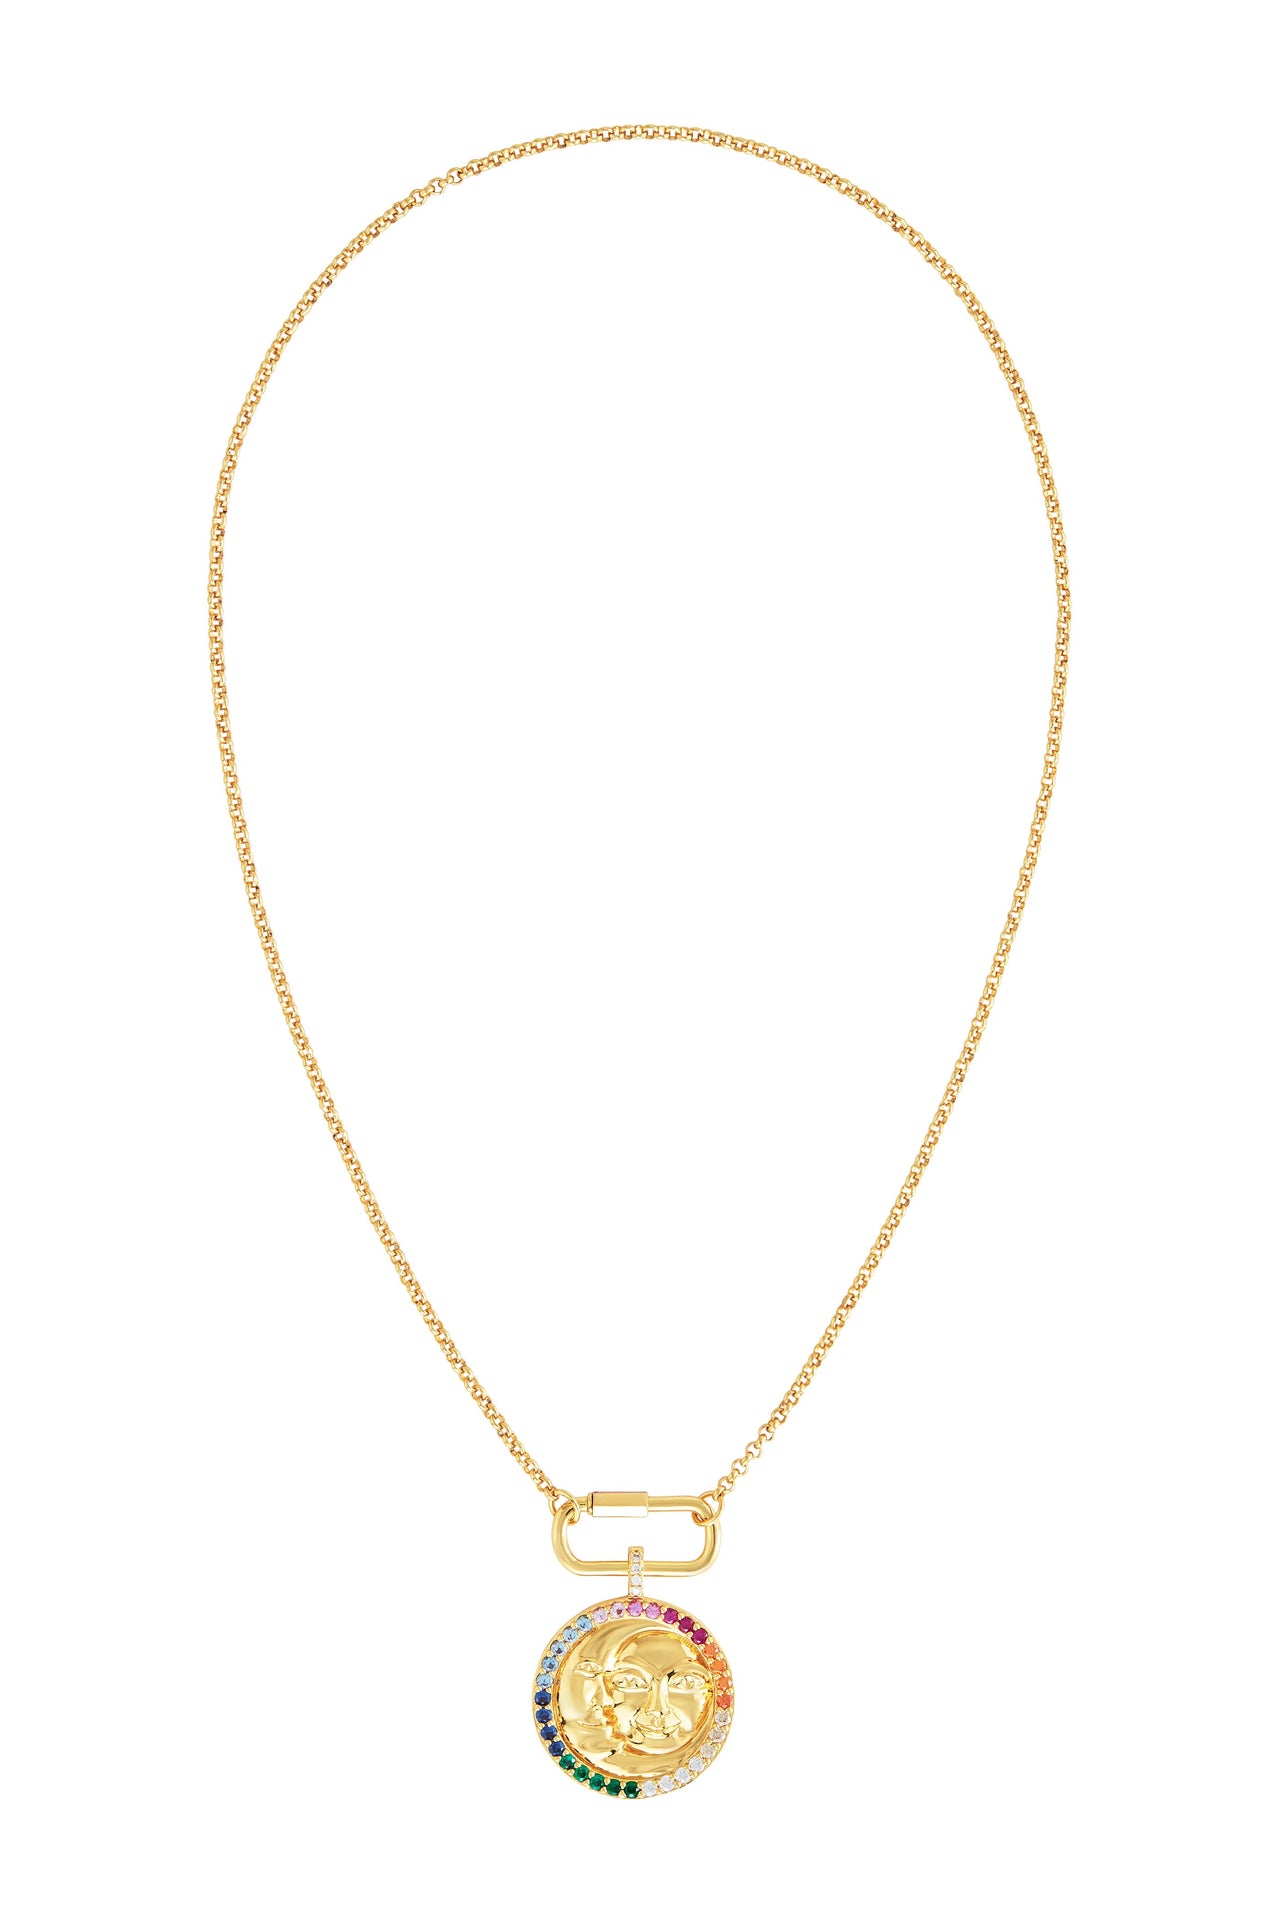 The Bali Necklace-Necklace-Celeste Starre-Debs Boutique